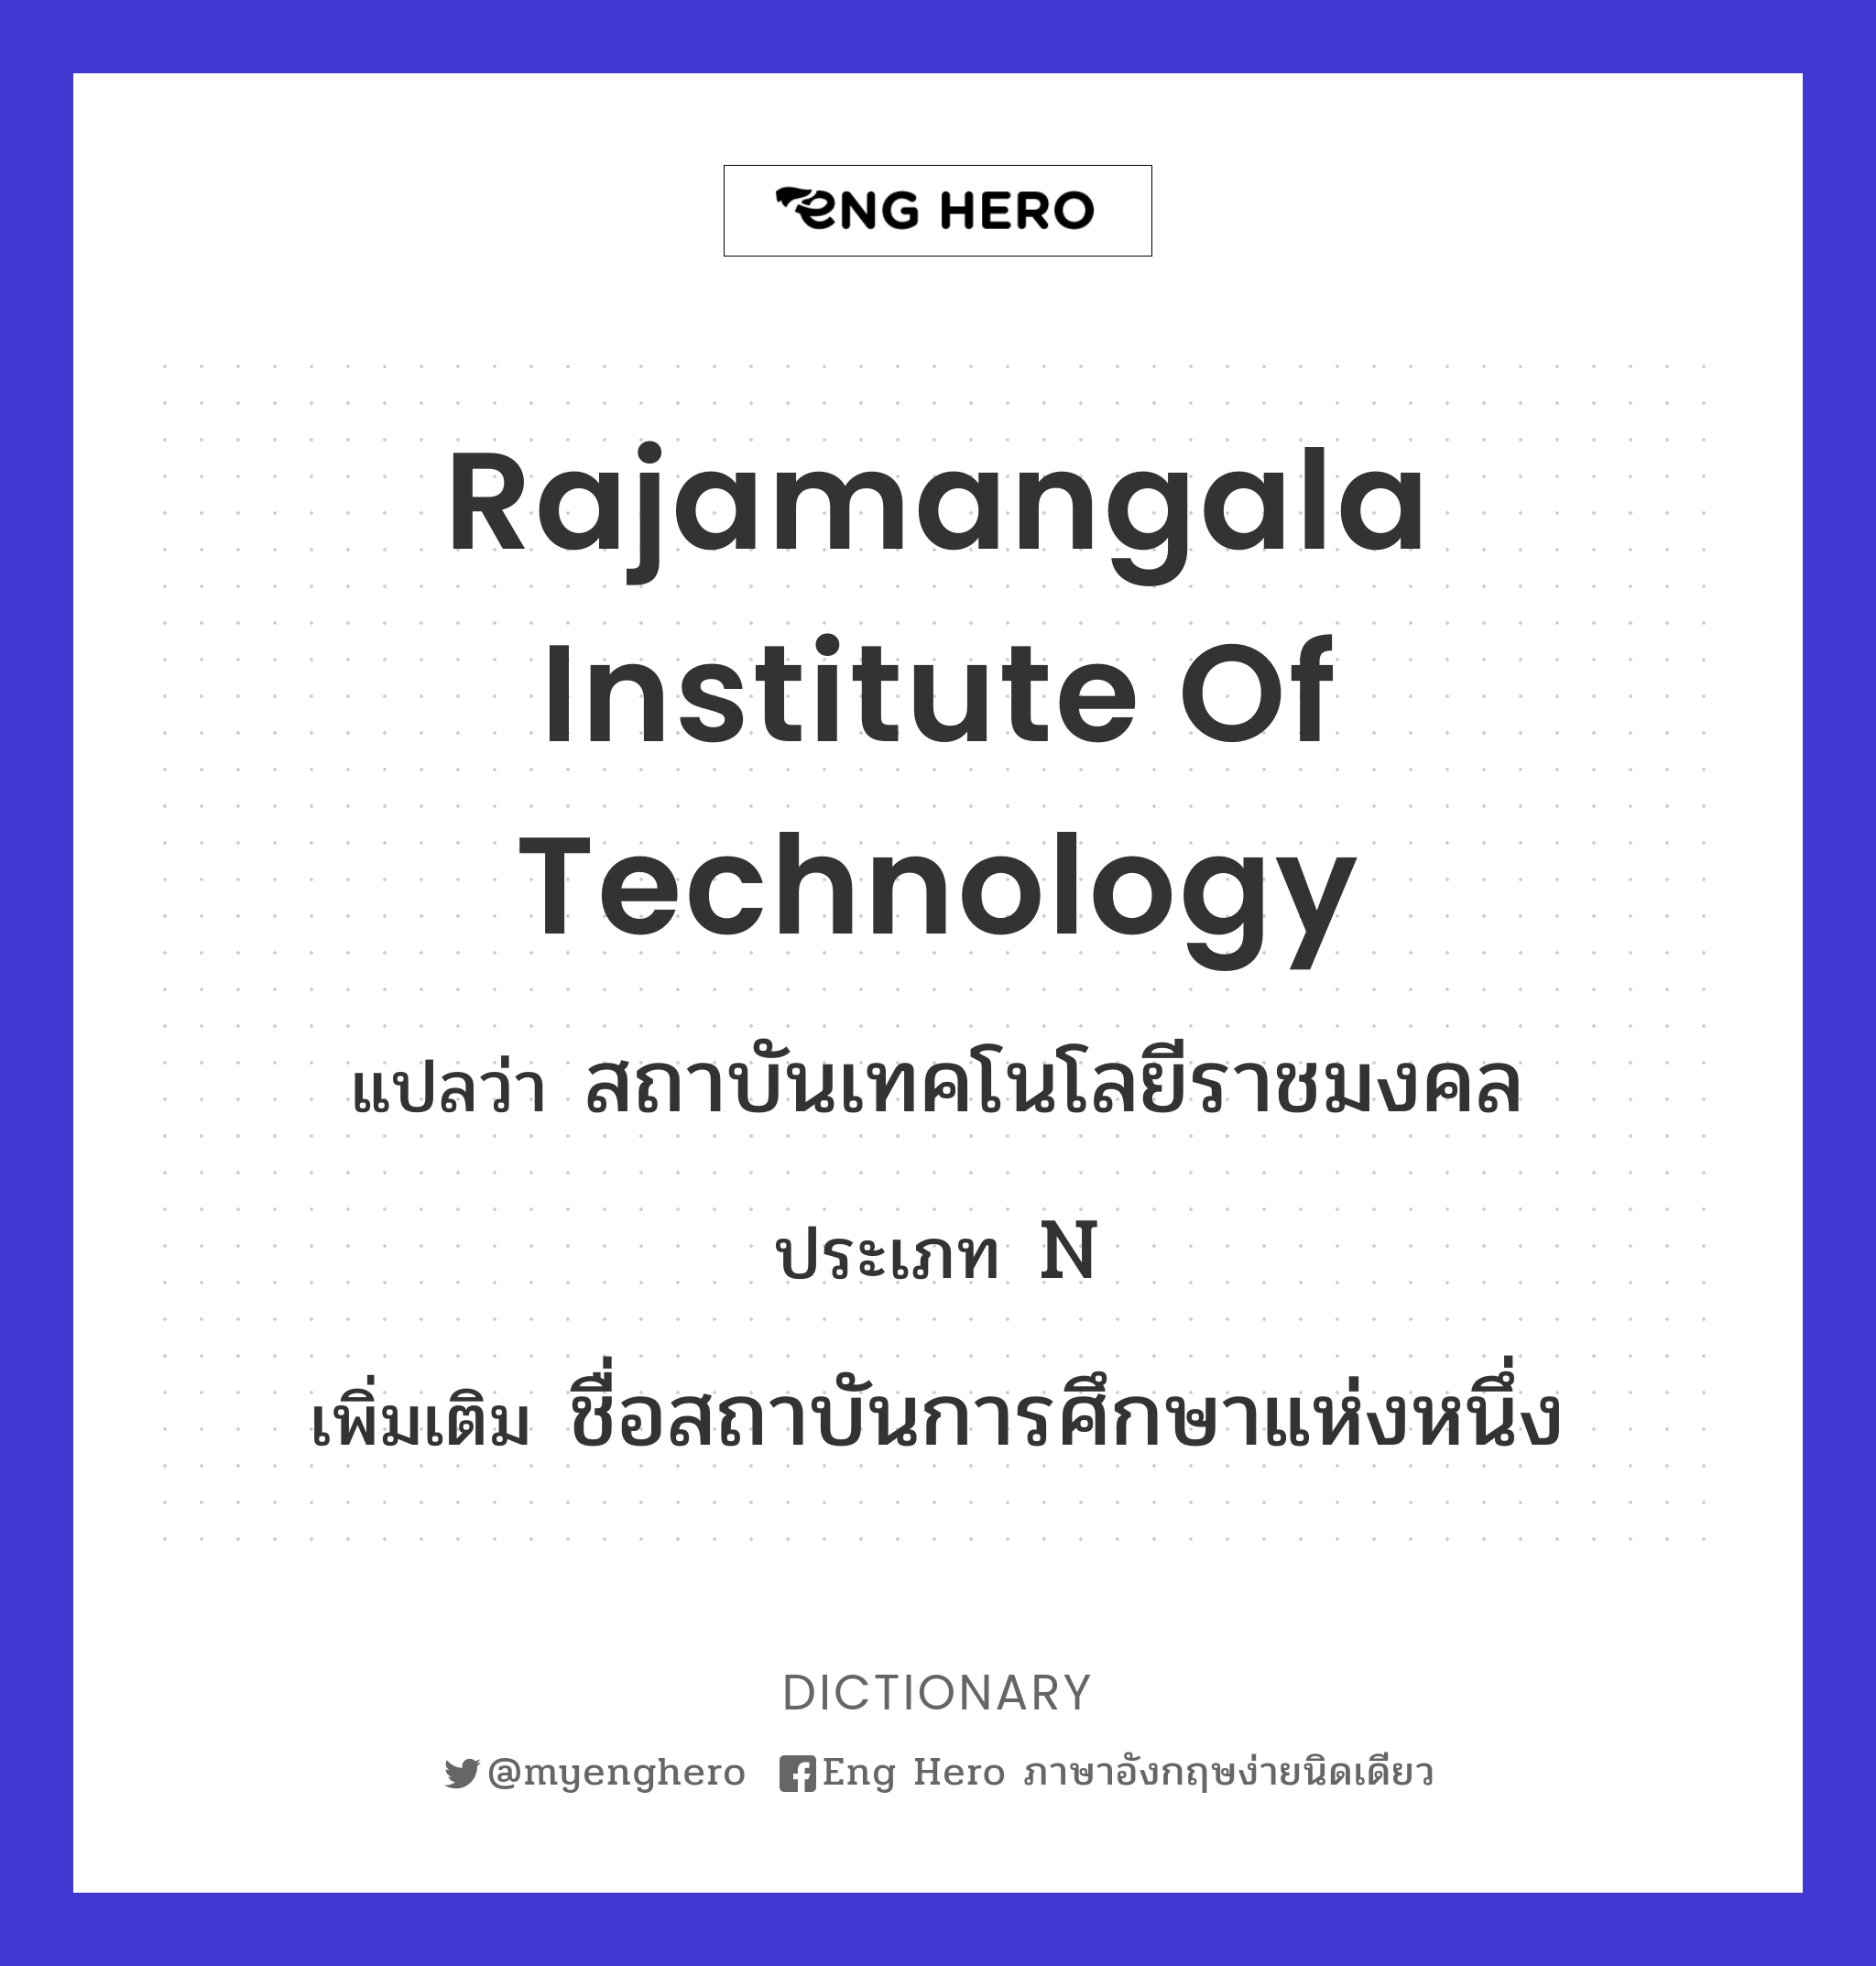 Rajamangala Institute of Technology